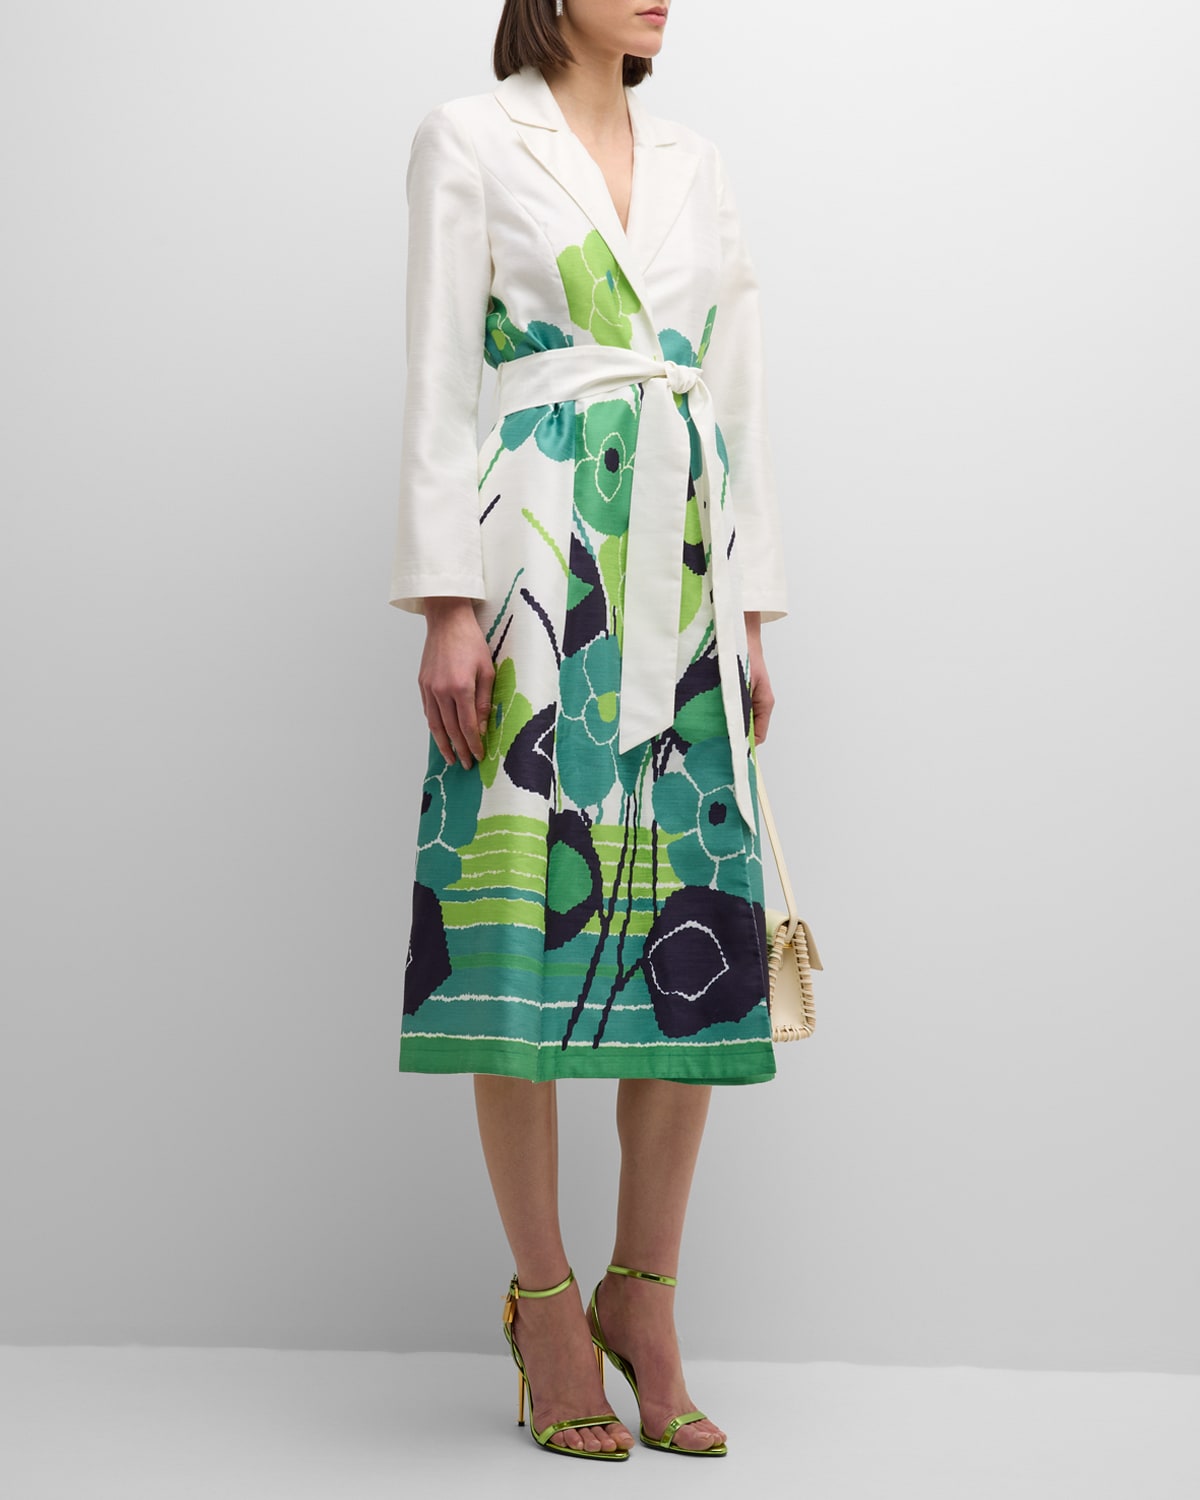 Frances Valentine Lucille Floral Wrap Dress In Green/multi